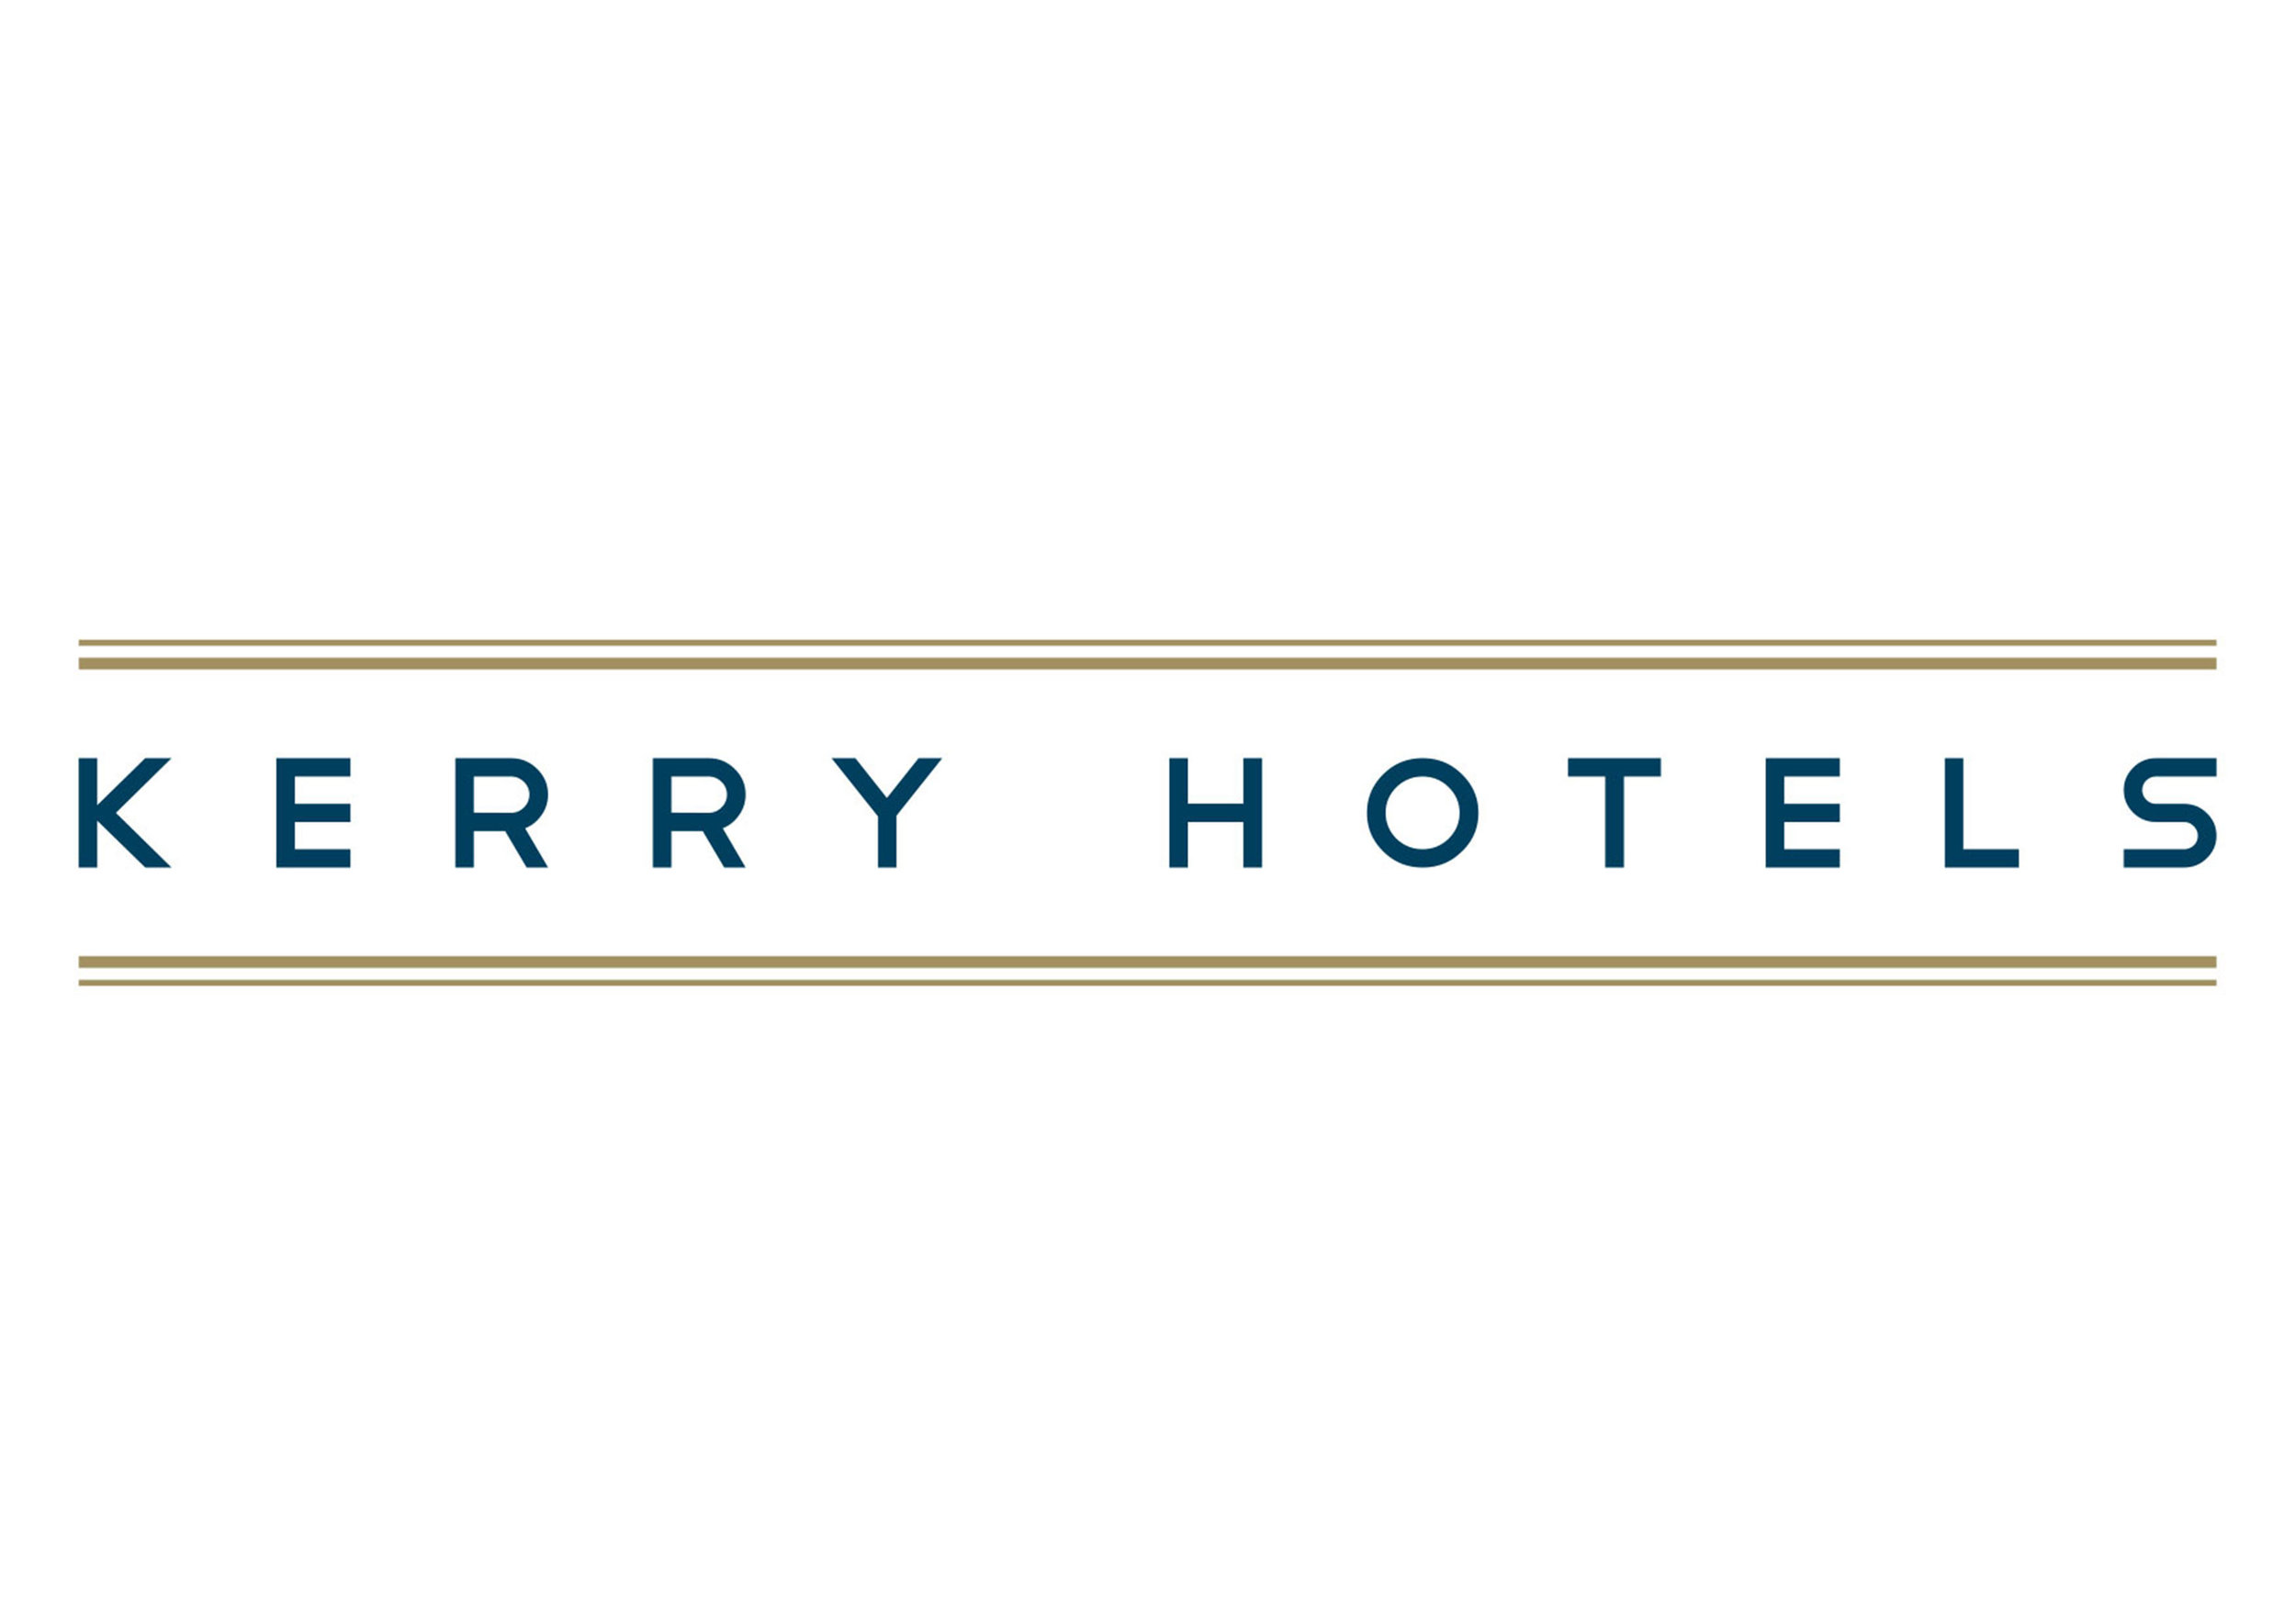 Kerry Hotels.jpg